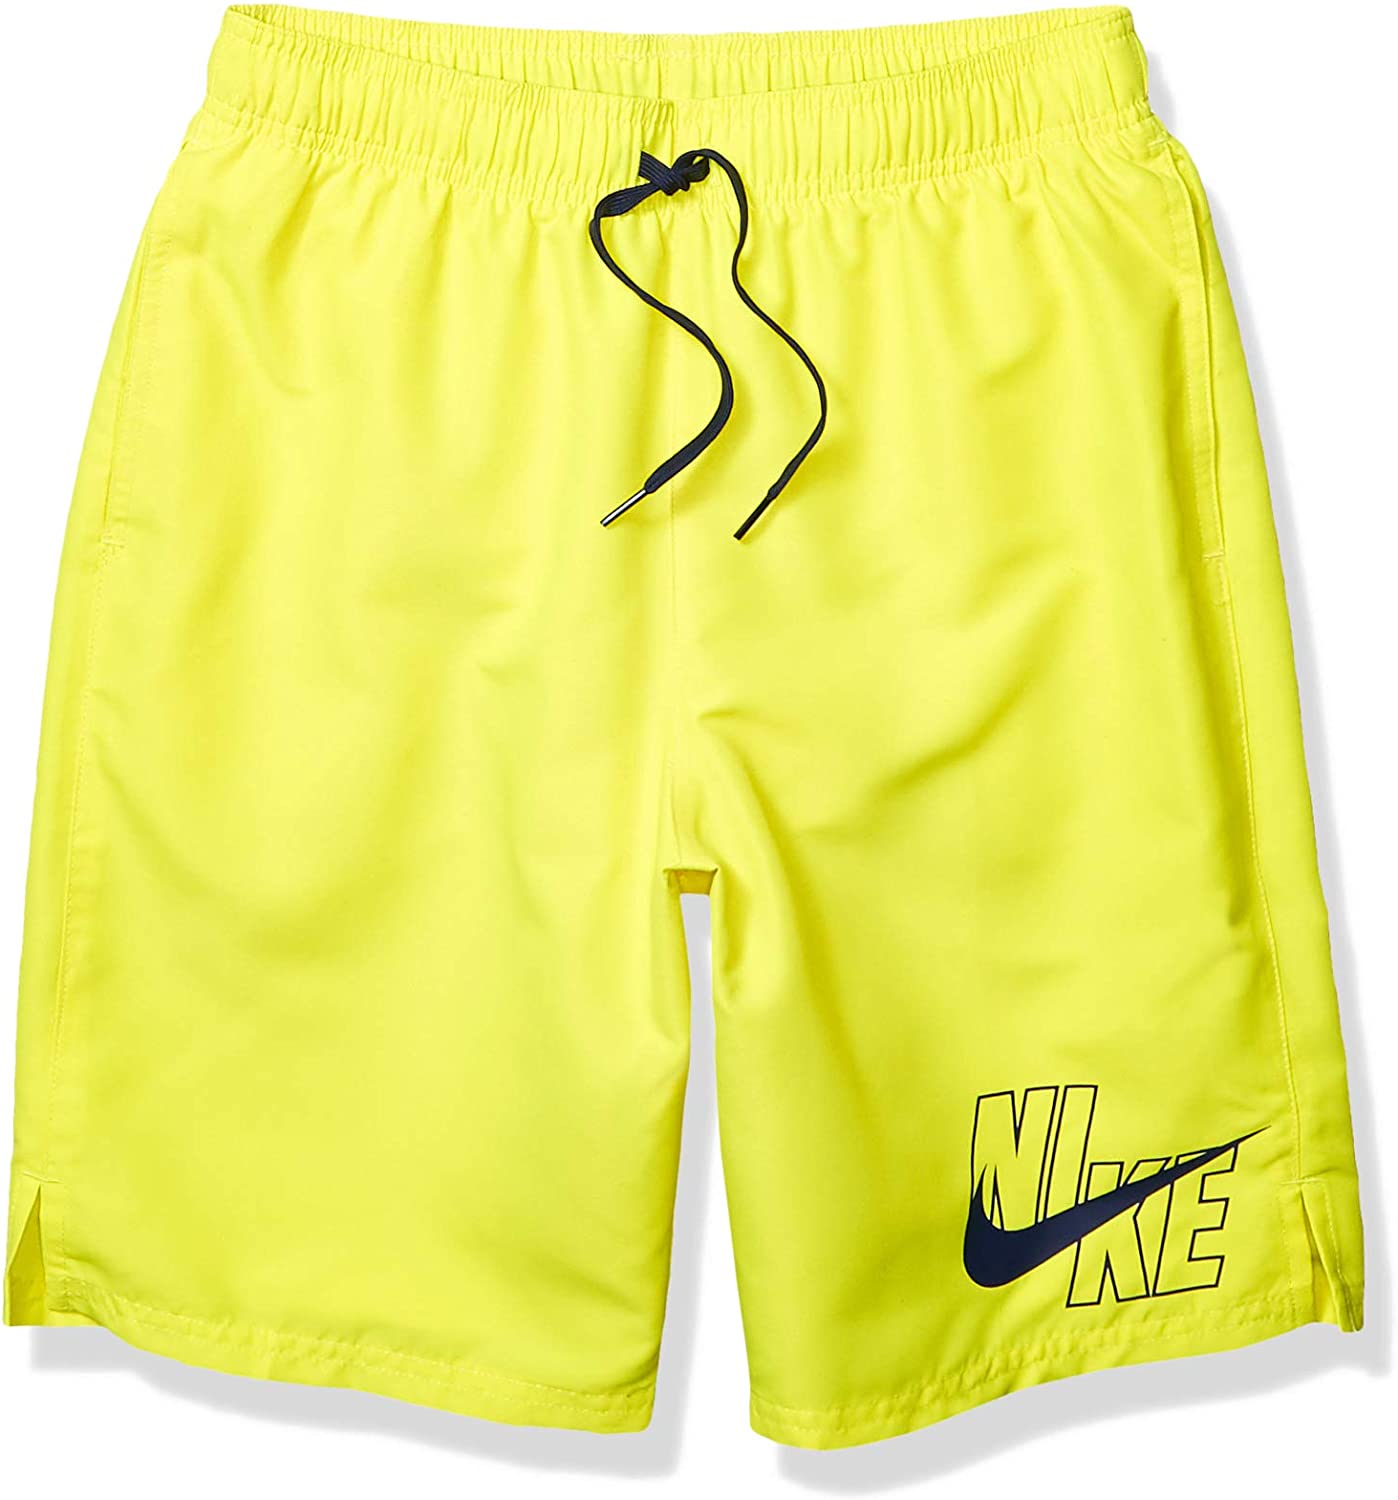 Men's Nike Logo Solid Lap 9" Volley Short Swim Trunk in Lemon Venom color from the front